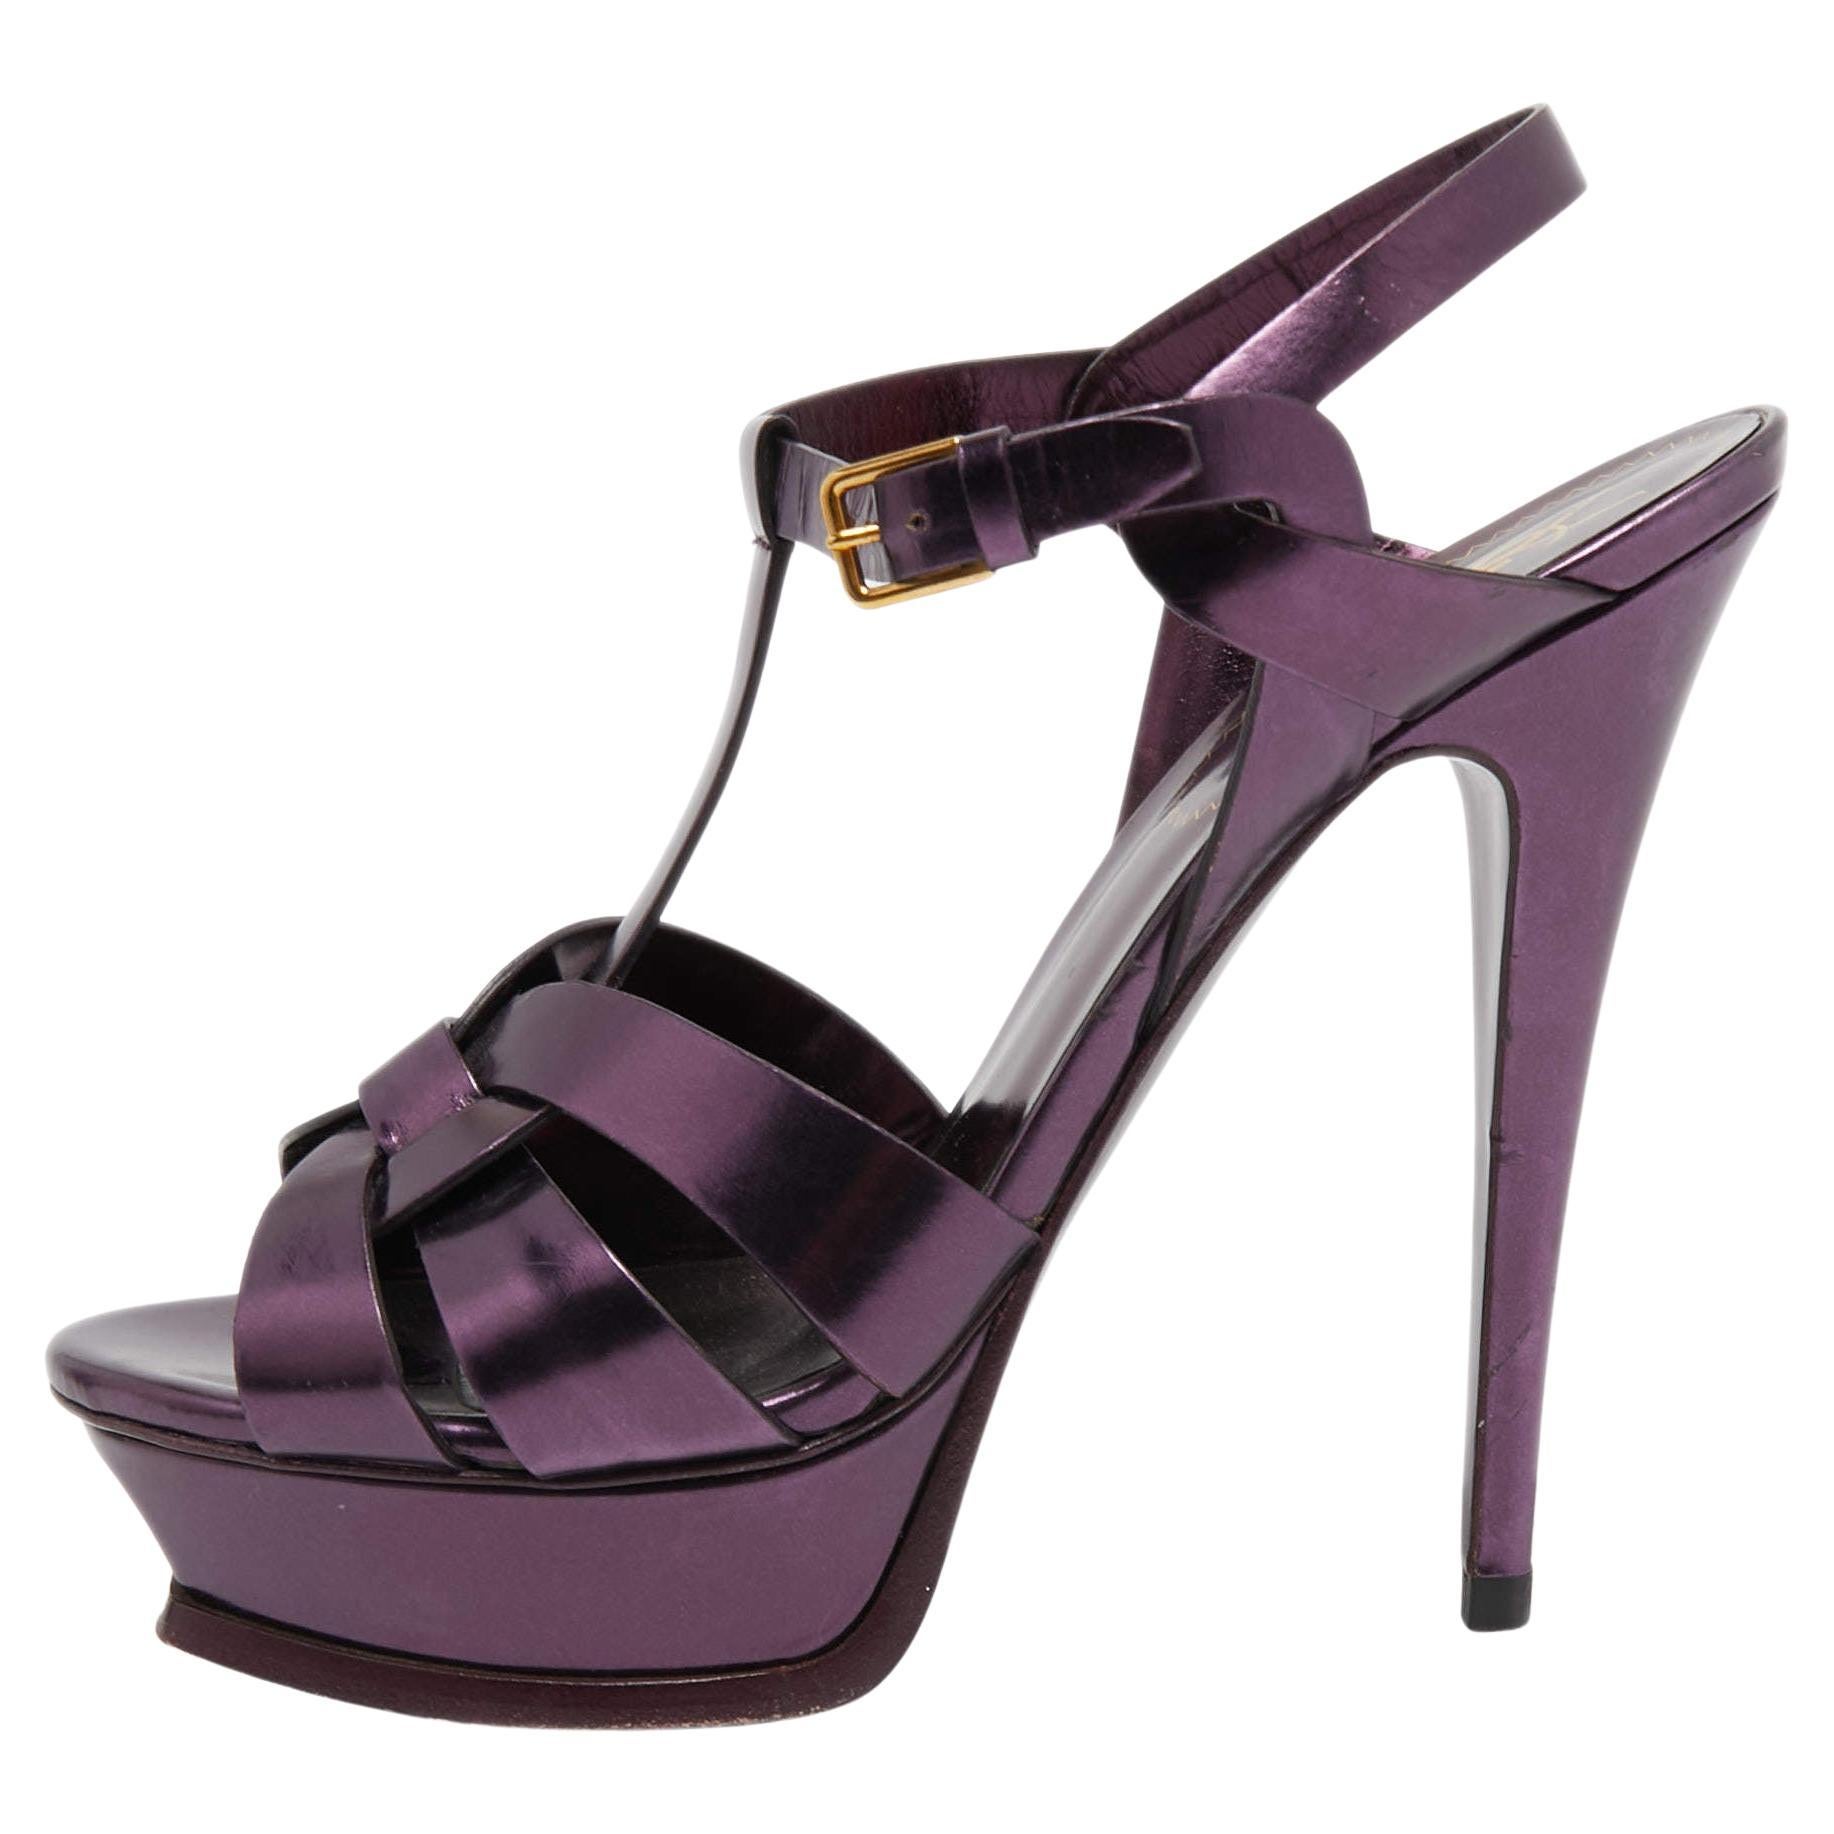 Yves Saint Laurent Metallic Purple Leather Tribute Sandals Size 38.5